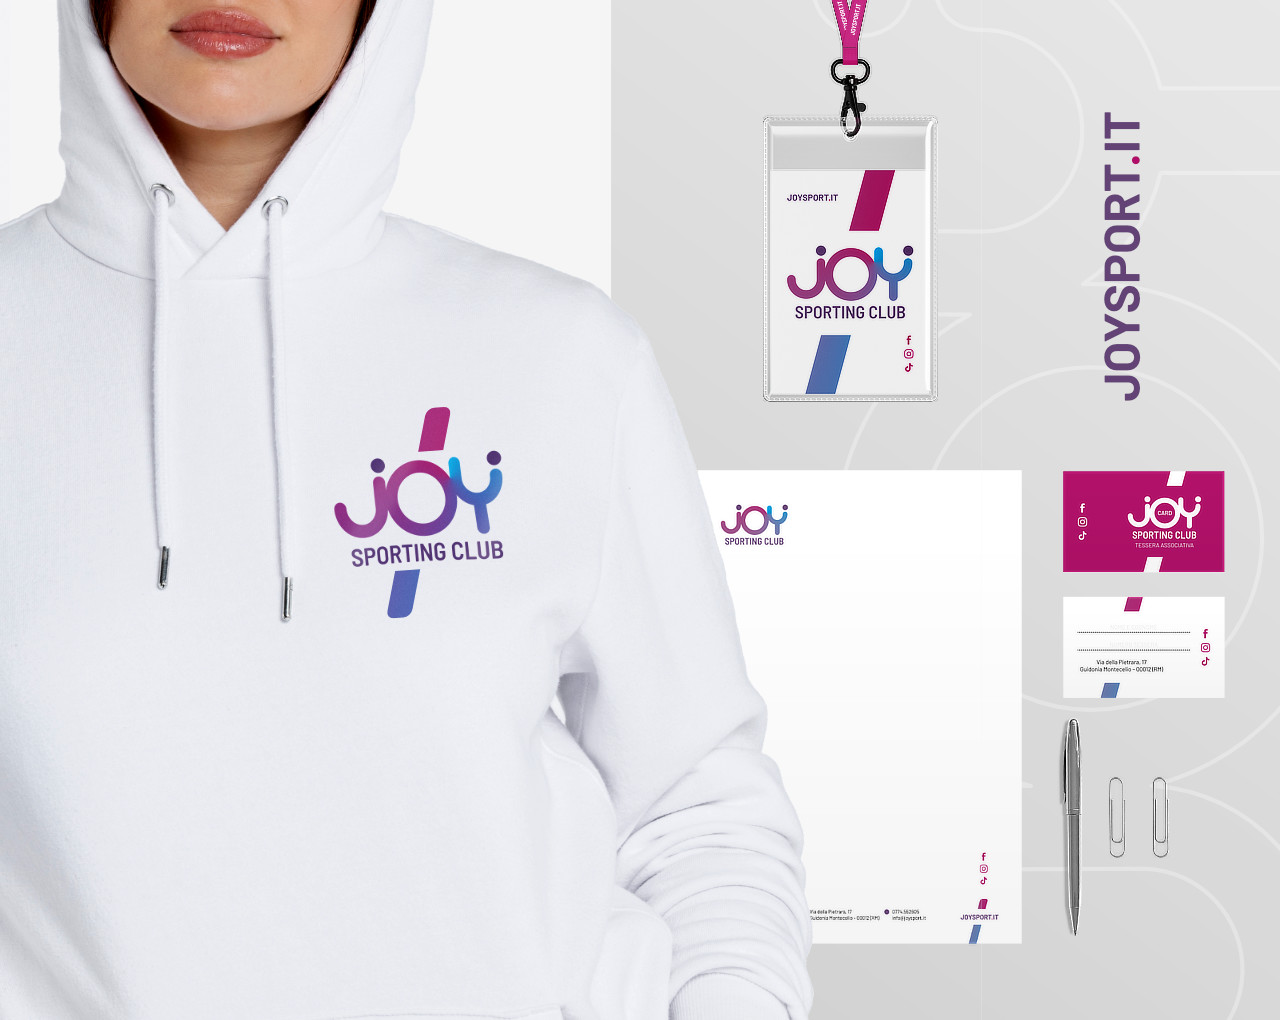 JUICE - Joy Sporting Club Identità visiva